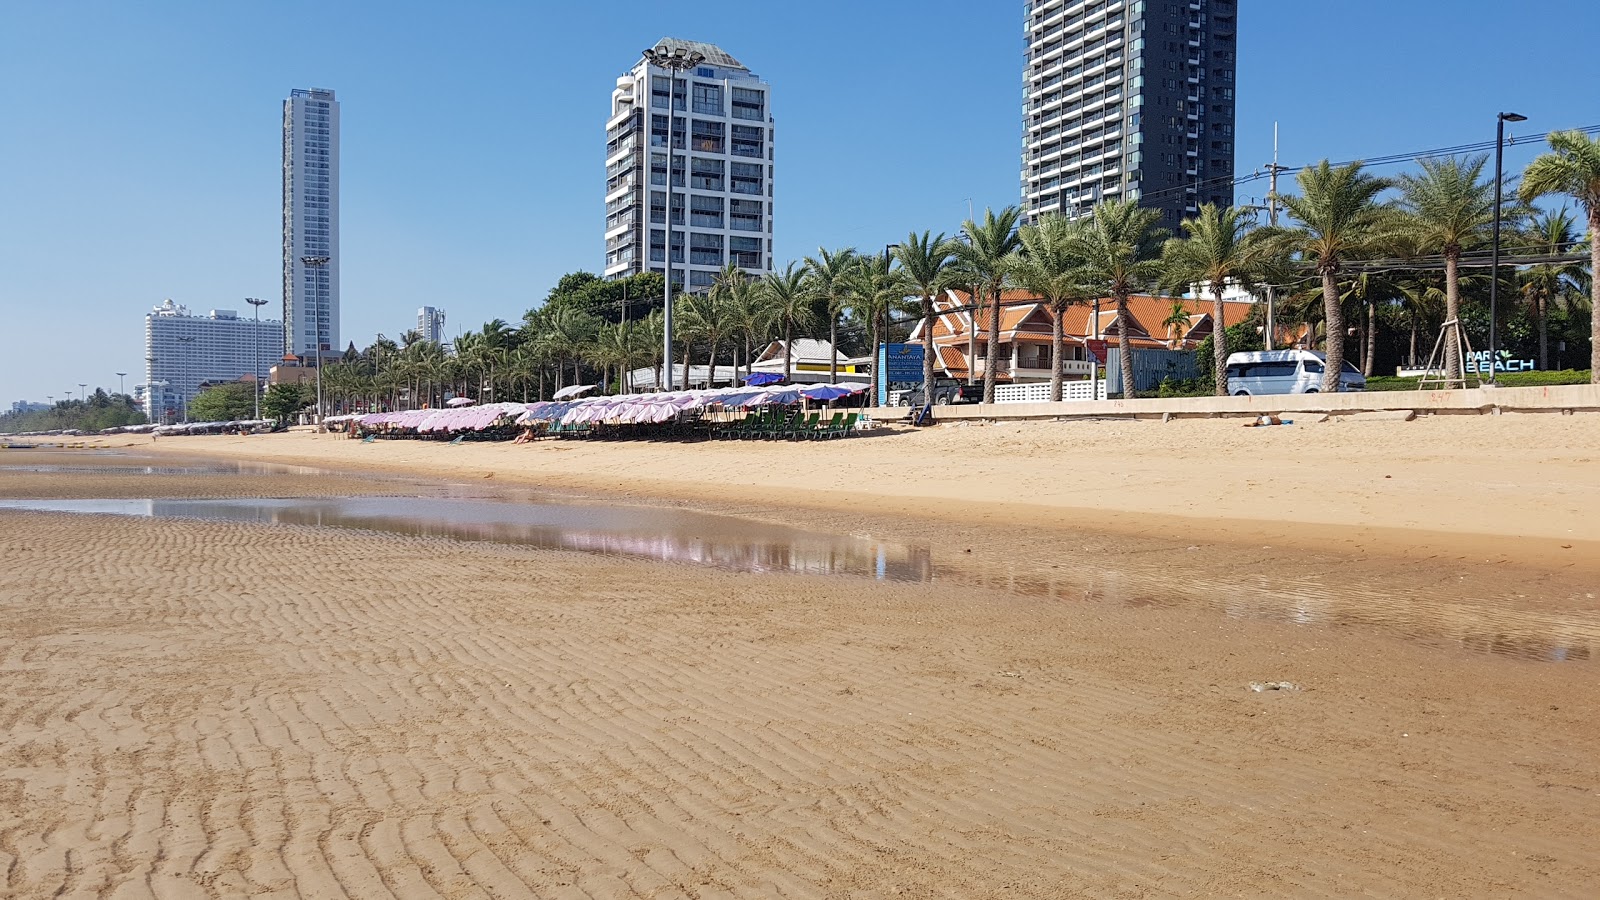 Foto de Jomtien Beach - lugar popular entre os apreciadores de relaxamento